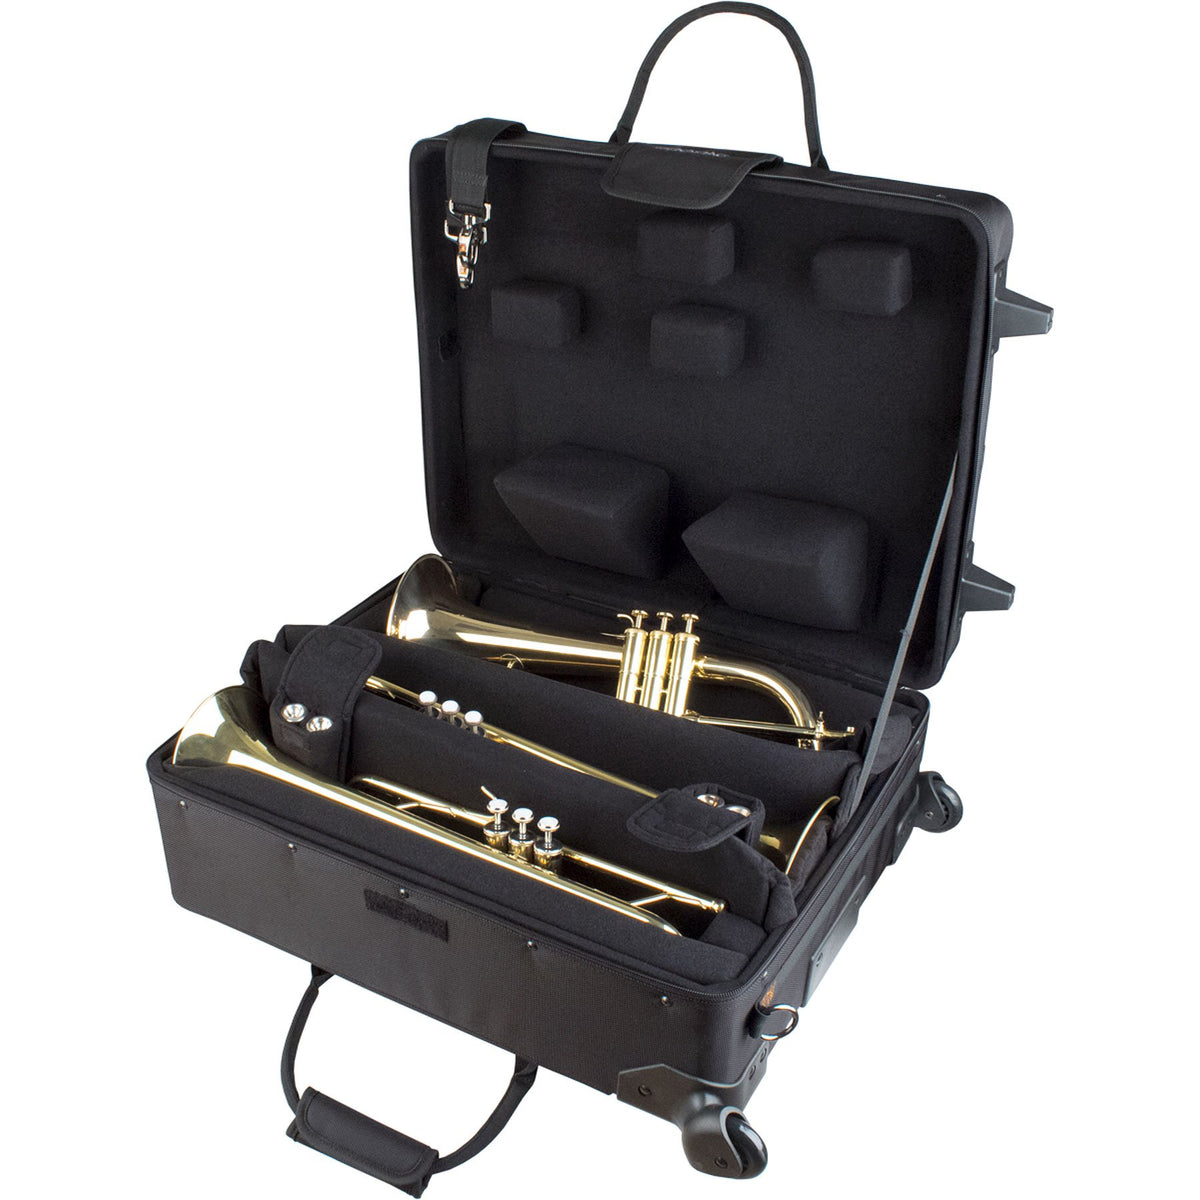 Protec - Quad Horn IPAC Case with Wheels (Trumpet/Flugelhorn)-Case-Protec-Music Elements